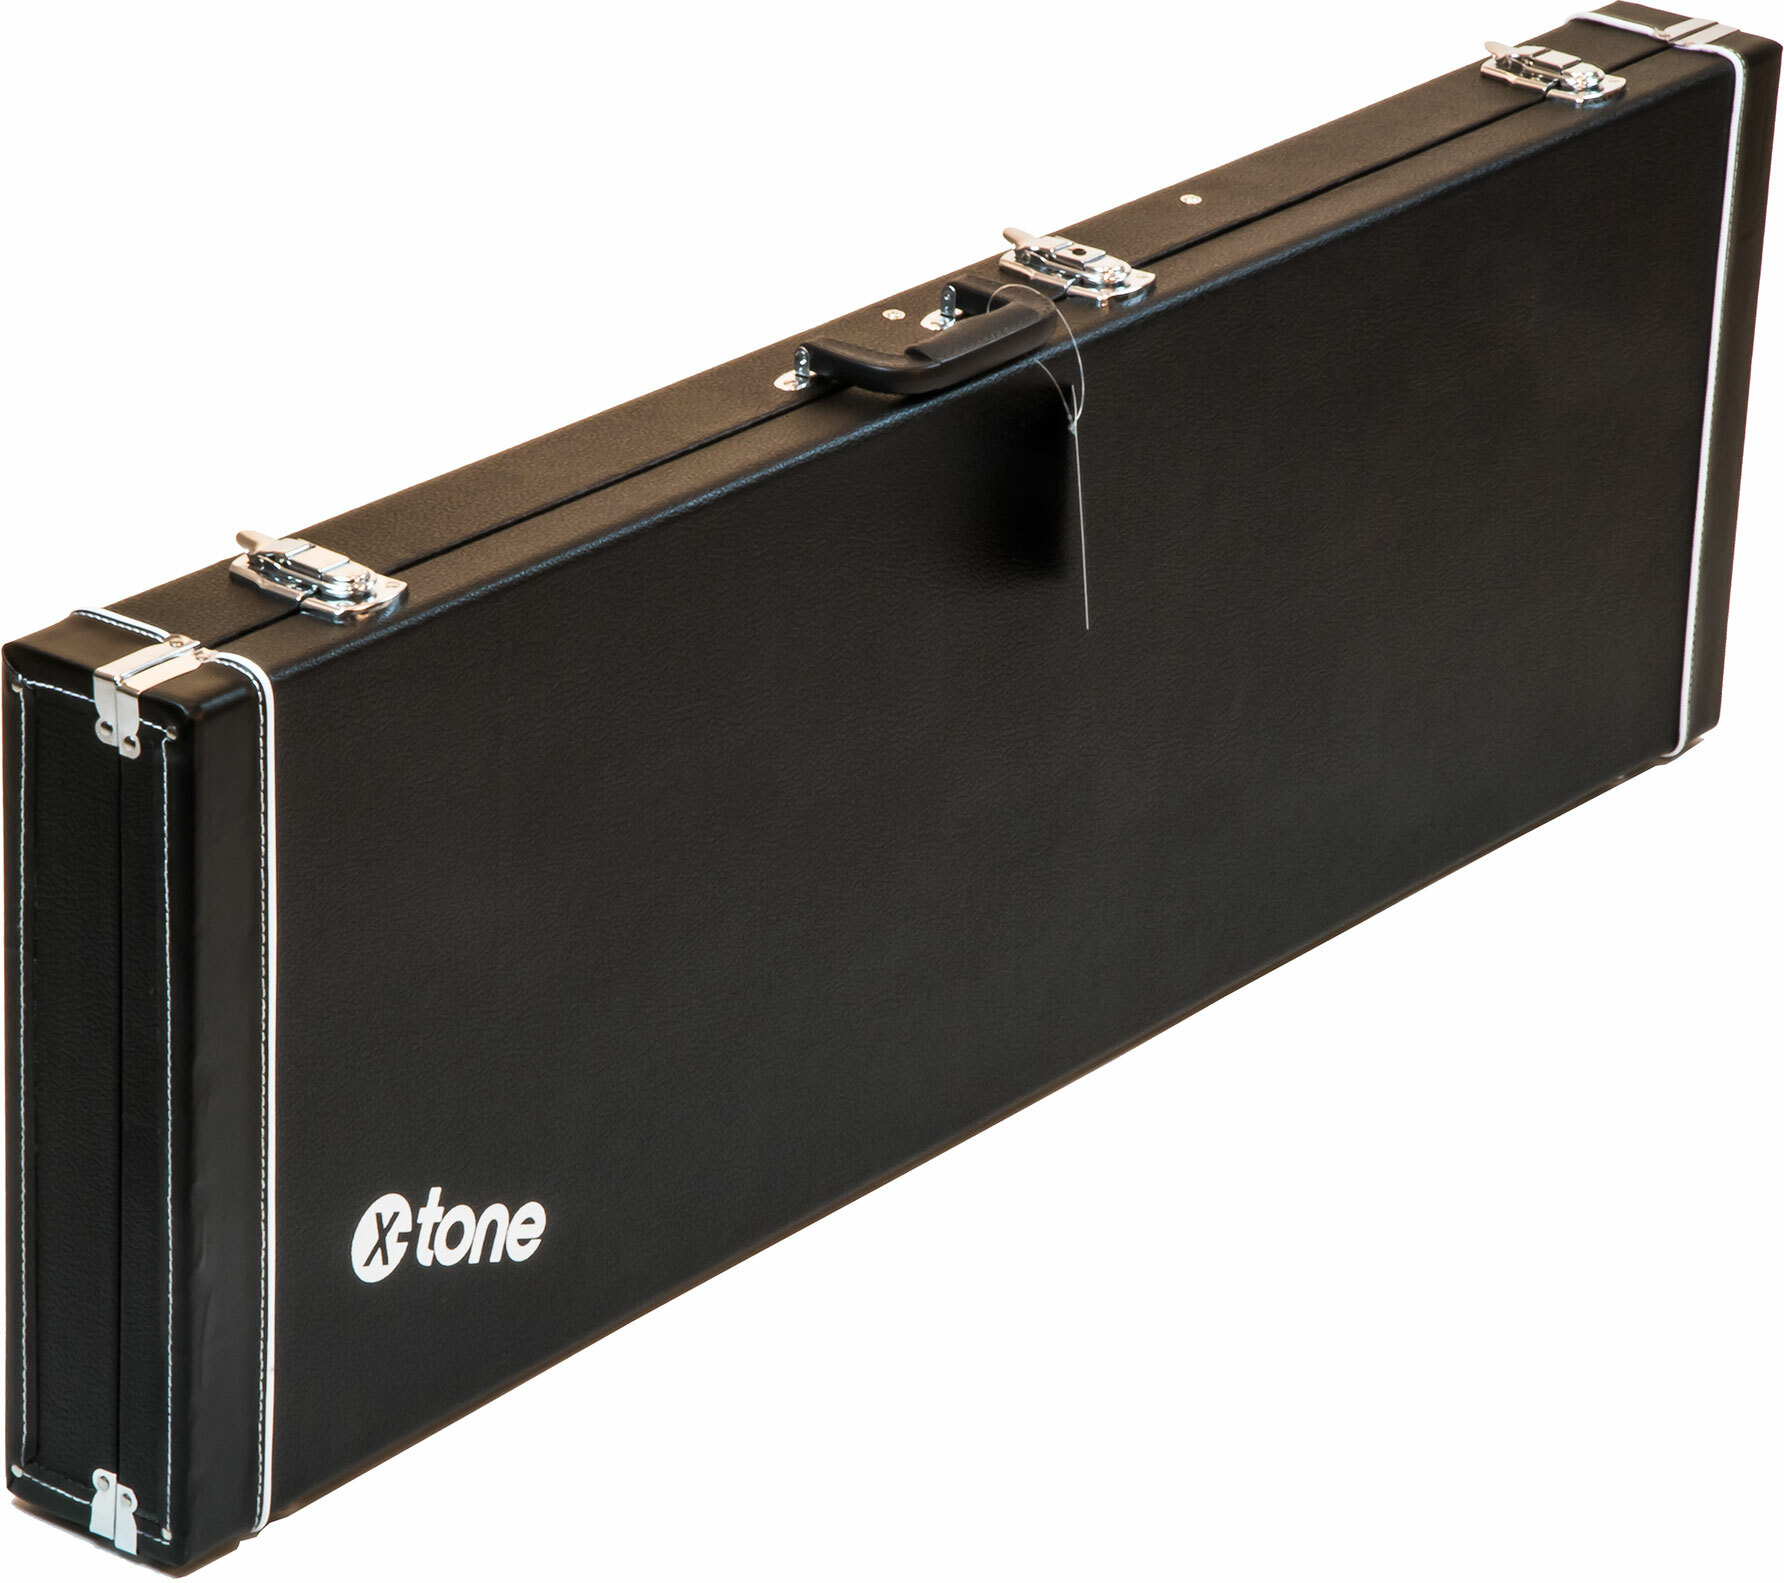 X-tone 1504 Standard Electrique Jazz/precision Bass Rectangulaire Black - Koffer für E-bass - Main picture